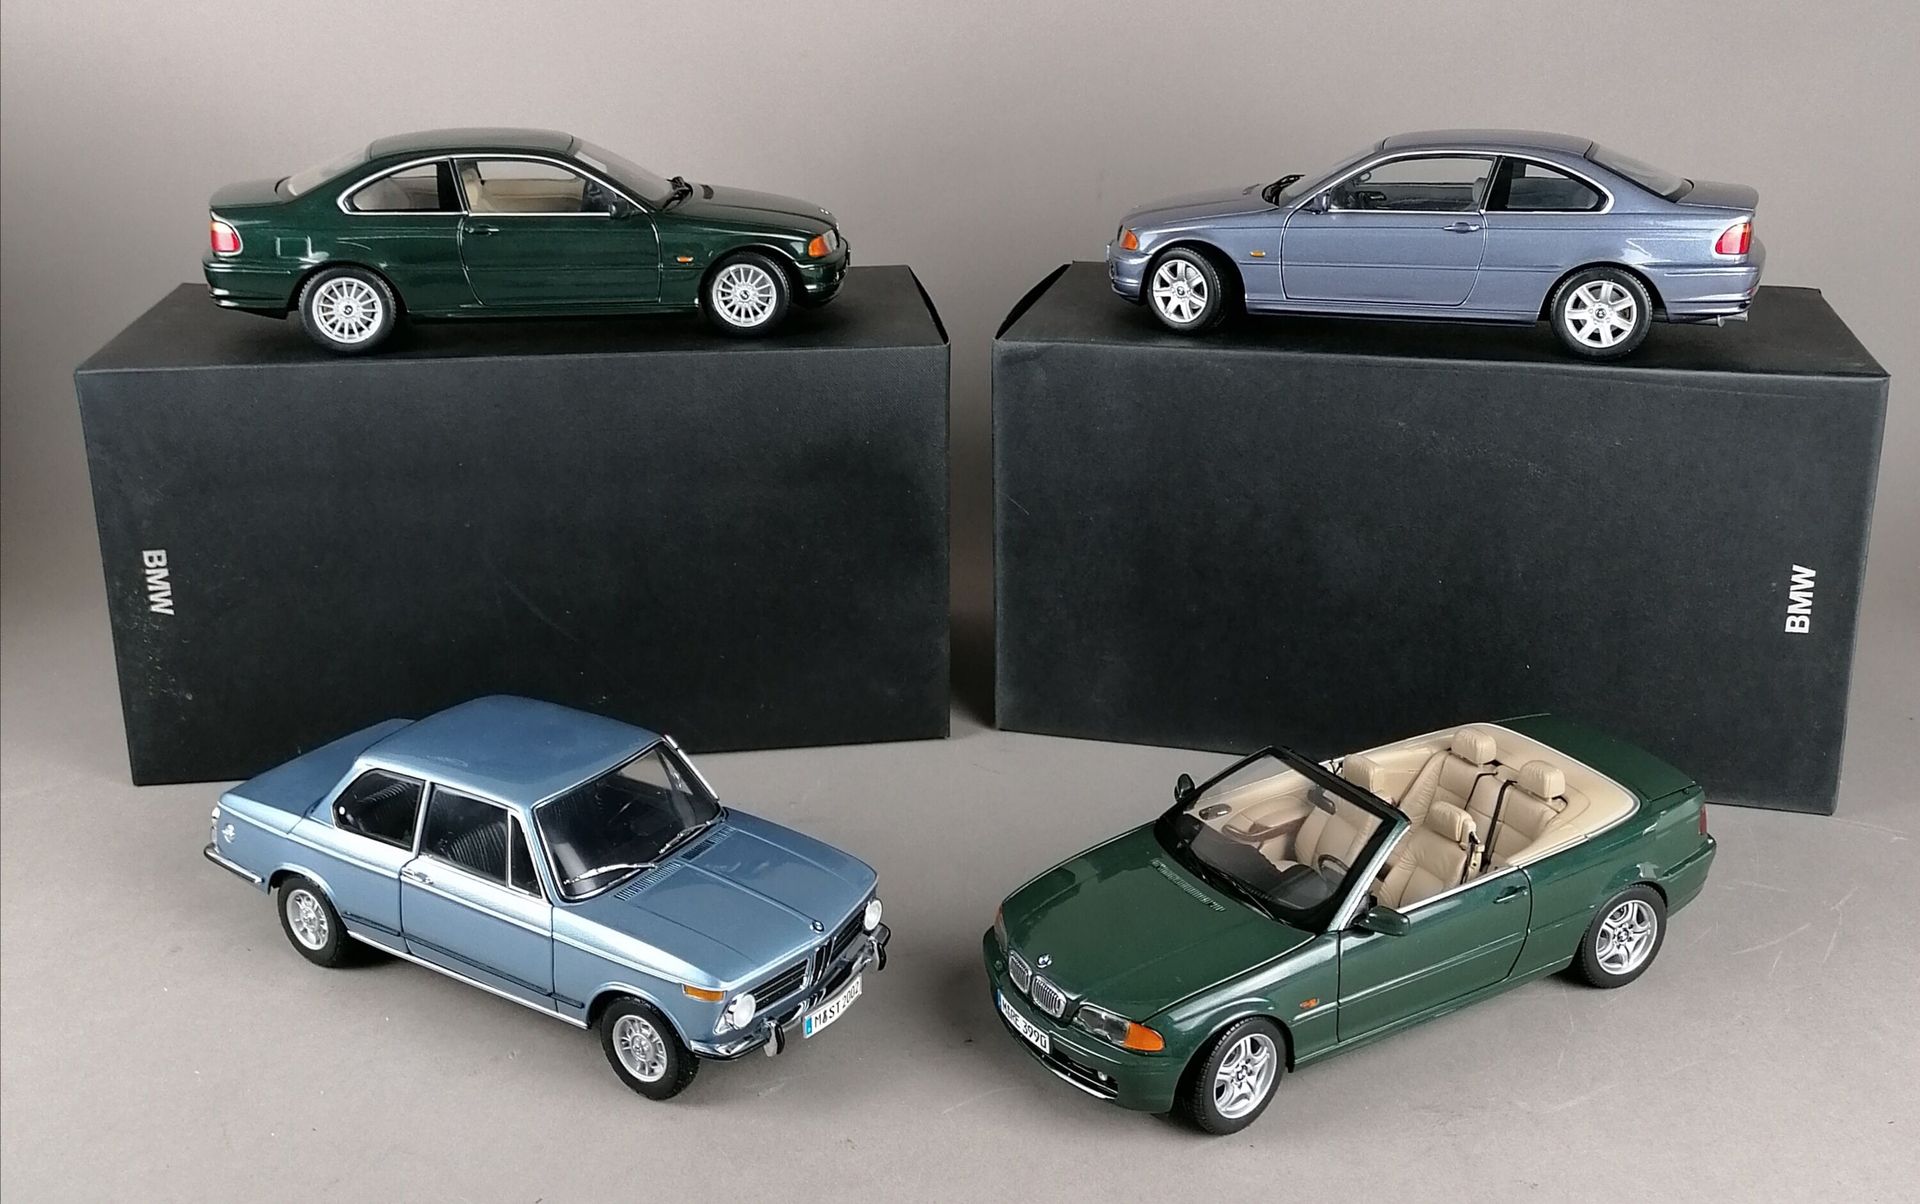 Null BMW - FOUR BMW 1/18 scale :

1x 3Series Cabrio

1x 2002 Til

1x 328Ci

1x 3&hellip;